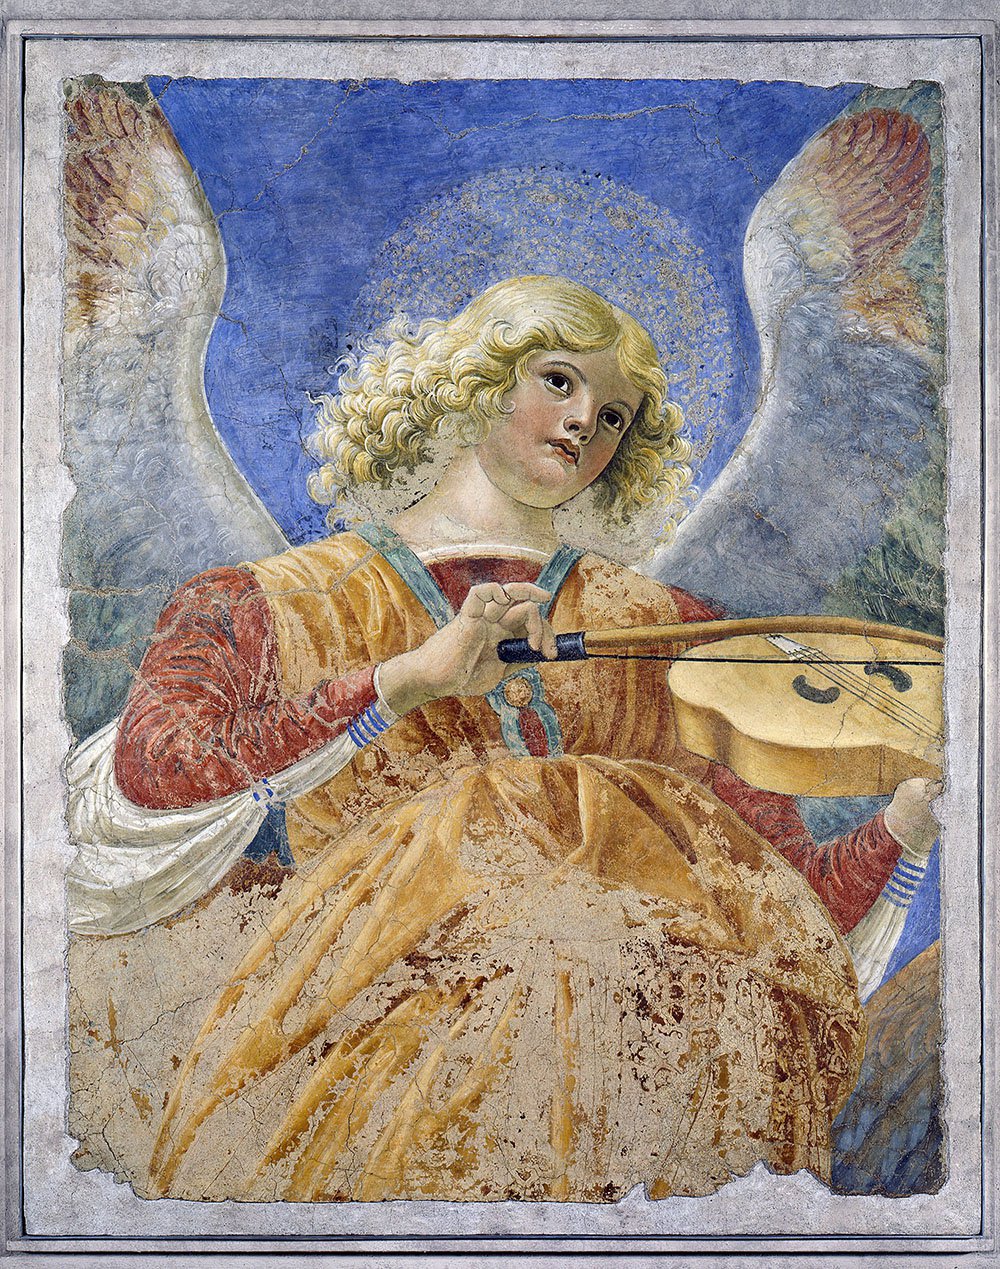 Мелоццо дельи Амбрози, прозванный Mелоццо да Форли. «Aнгел, играющий на виоле». 1480. Выставка «Roma Aeterna». Фото: Музеи Ватикана